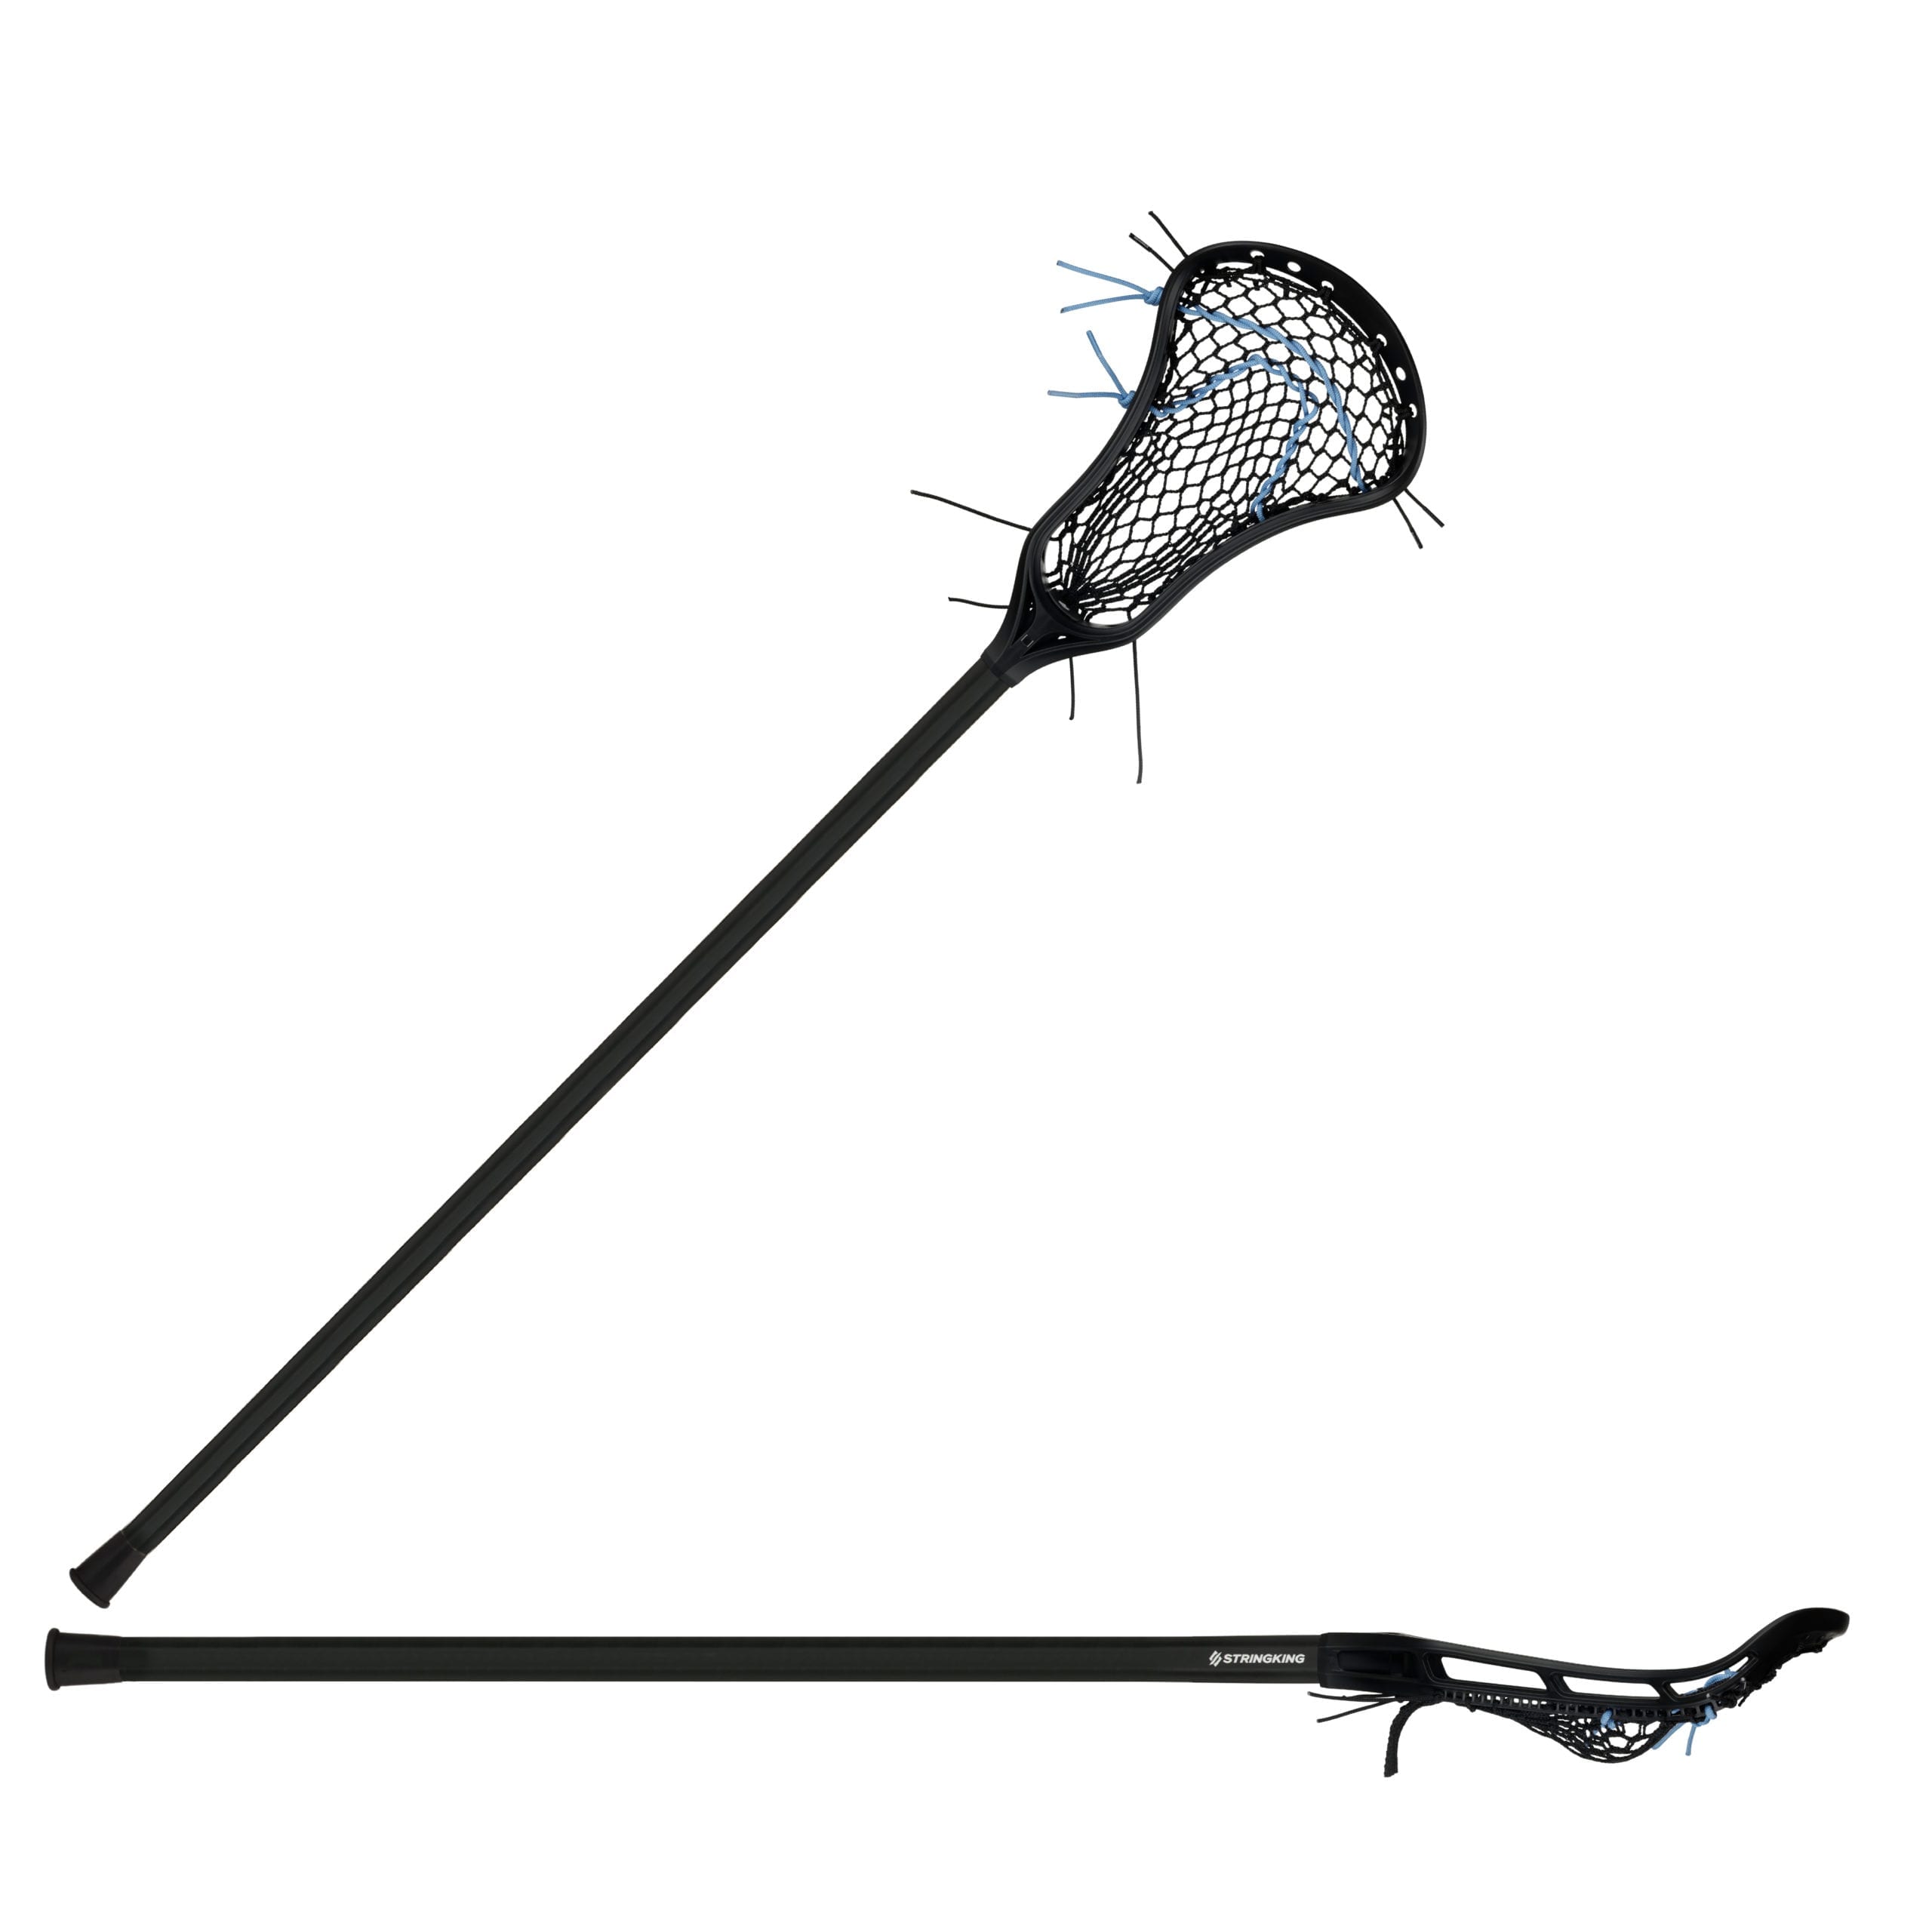 StringKing-Womens-Complete-Jr-Lacrosse-Stick-Black-Carolina-Full-Stick-scaled-1.jpg